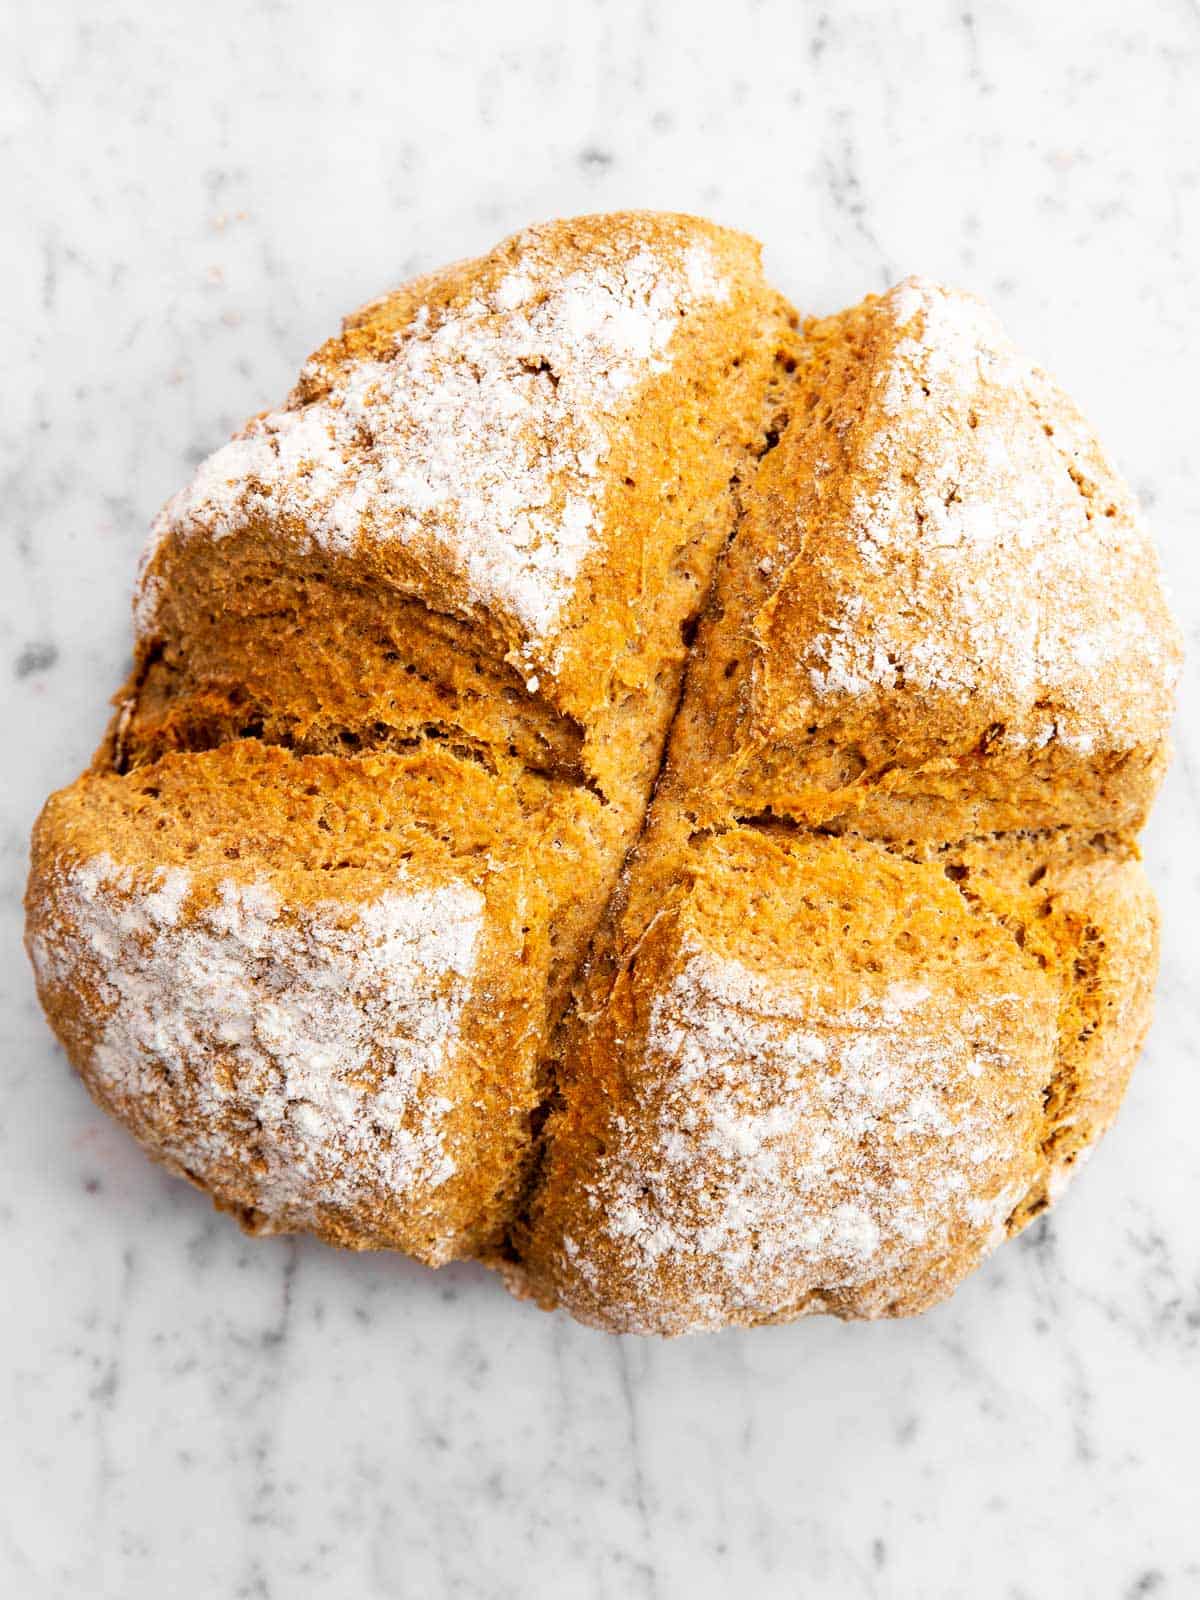 https://www.savorynothings.com/wp-content/uploads/2021/03/traditional-irish-soda-bread-image-9.jpg